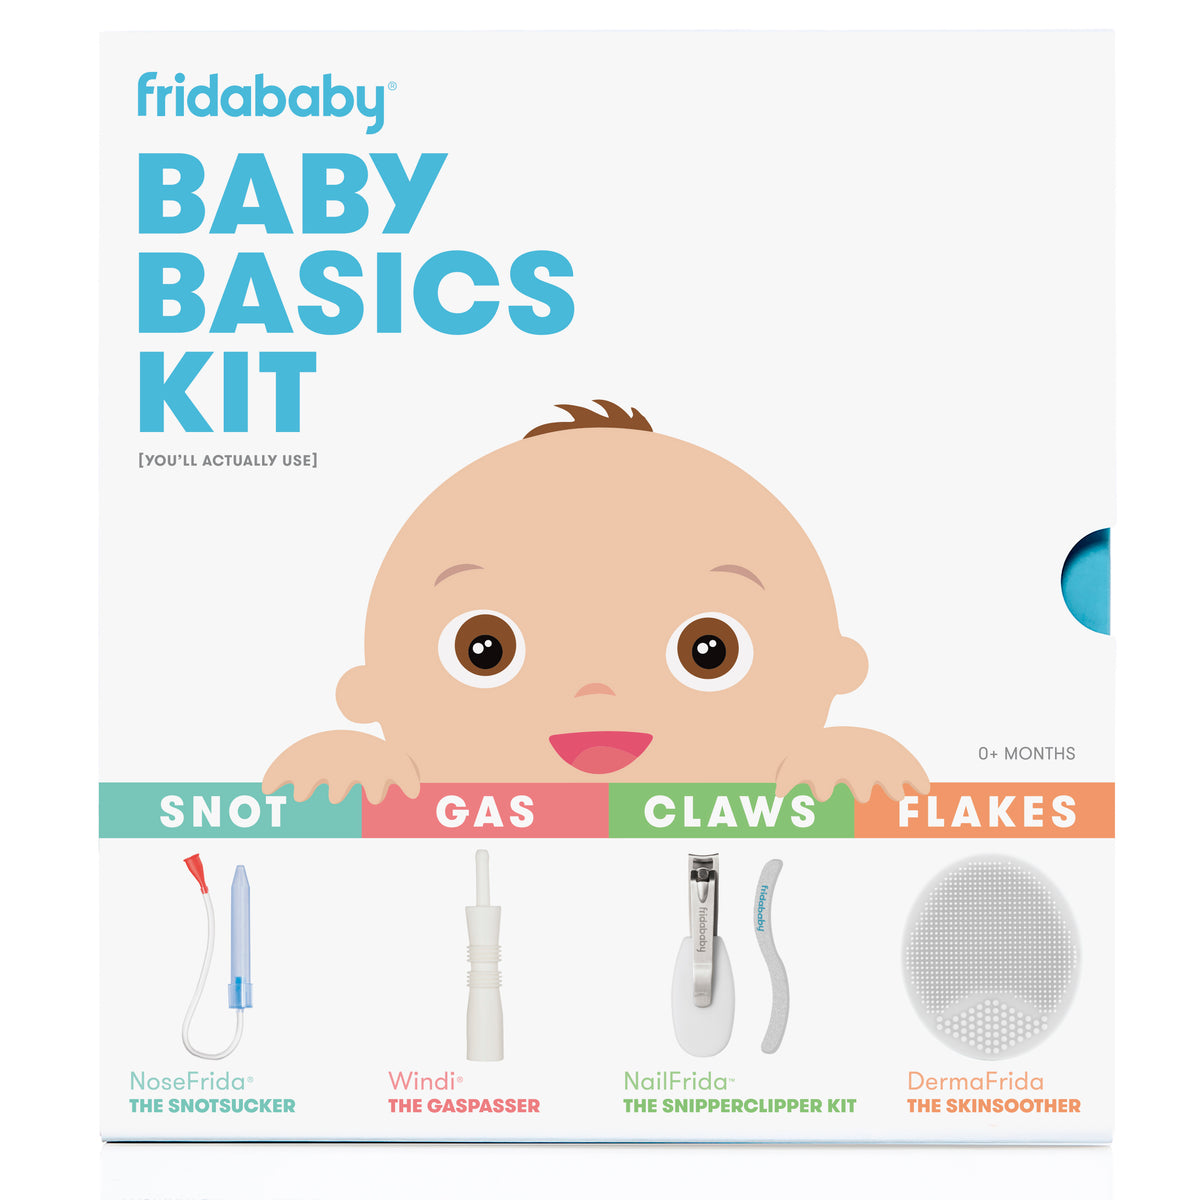 The Baby Basics Kit